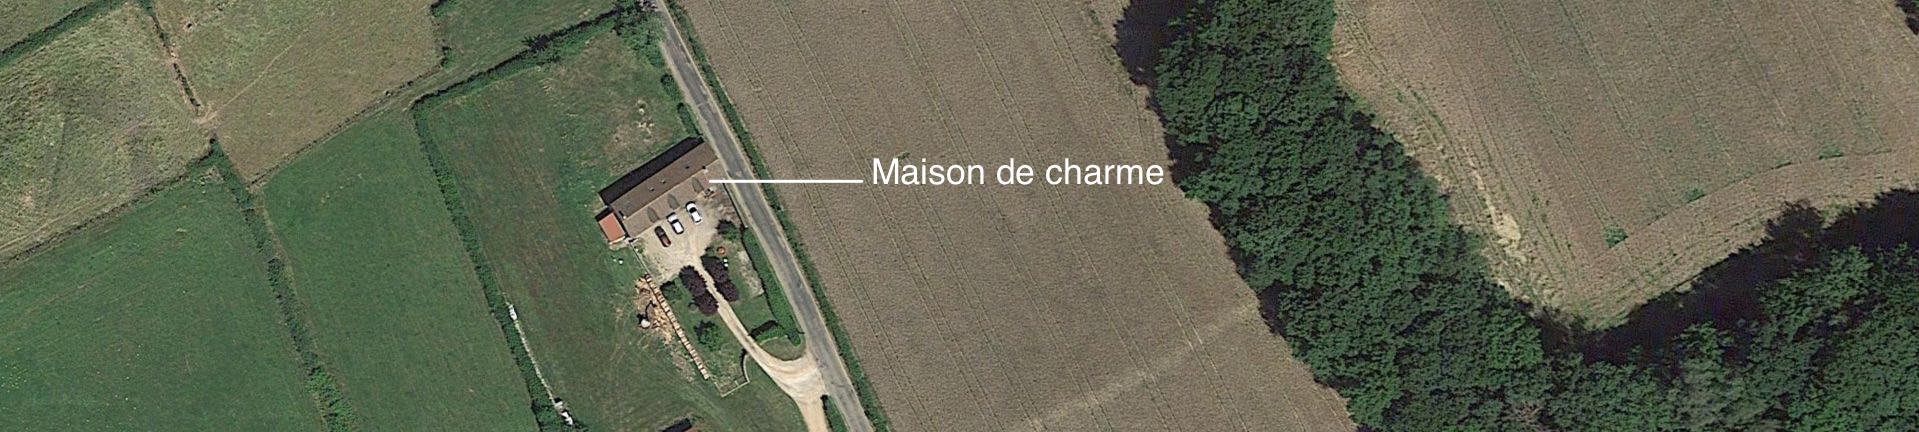 Google_Earth-maison-de-charme-annote-web